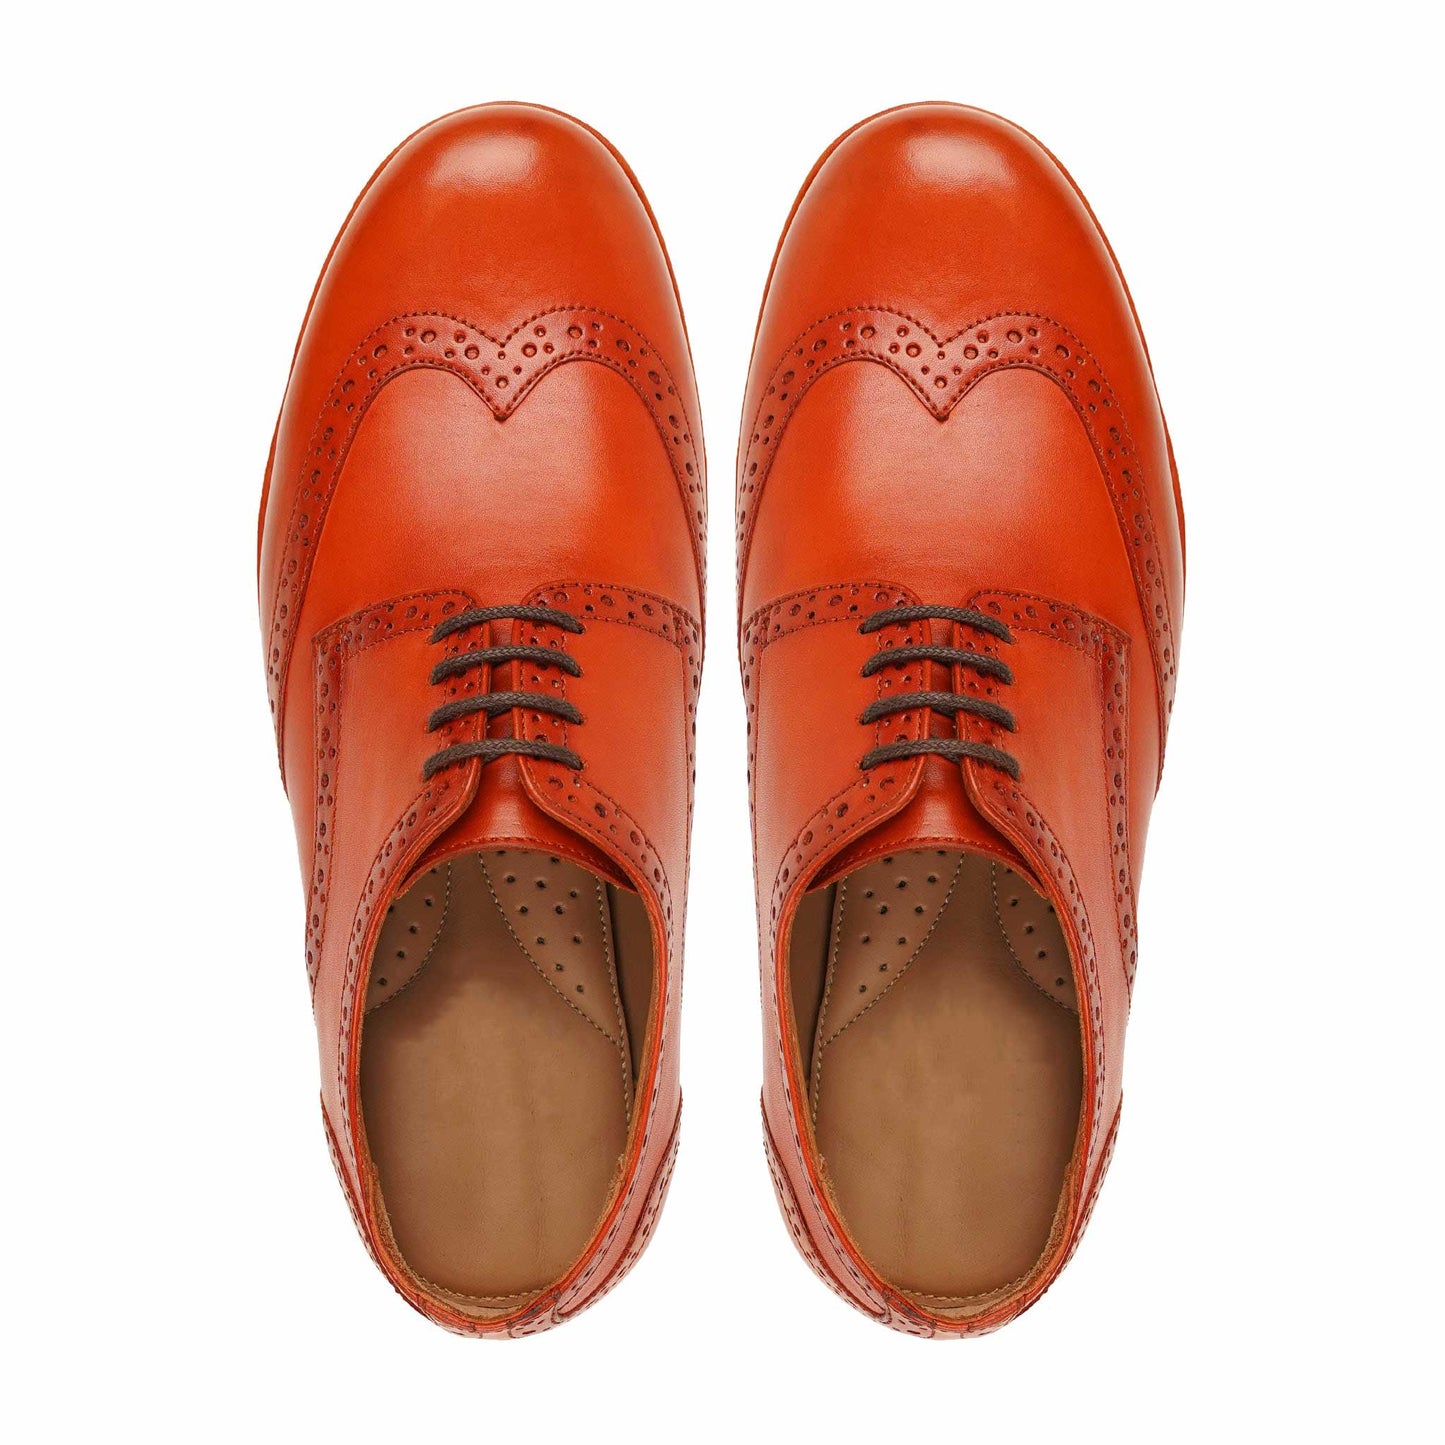 Men's Oxfords & Derby Shoes Derby Boots, derby shoes, derby shoes men, Leather Boots